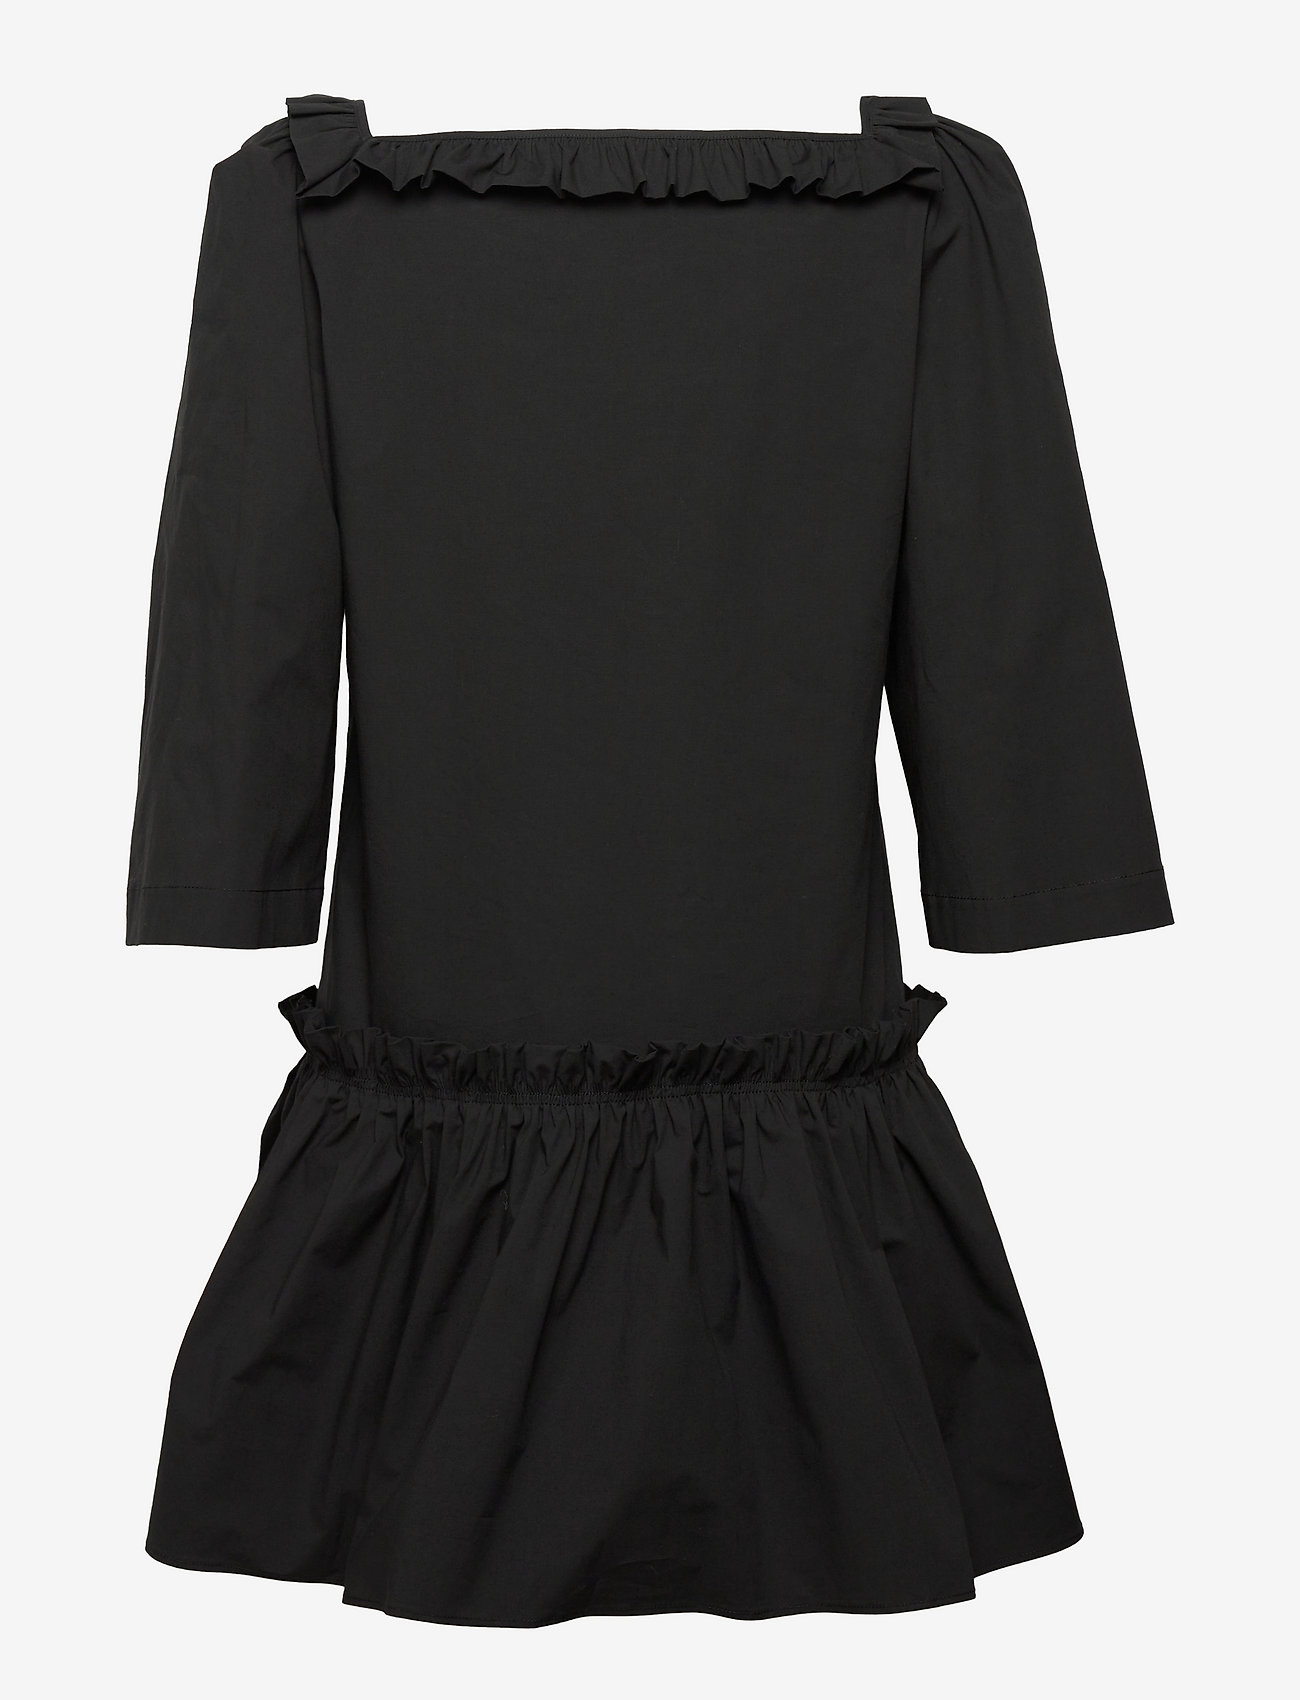 Boutique Moschino - Dress - summer dresses - black - 1